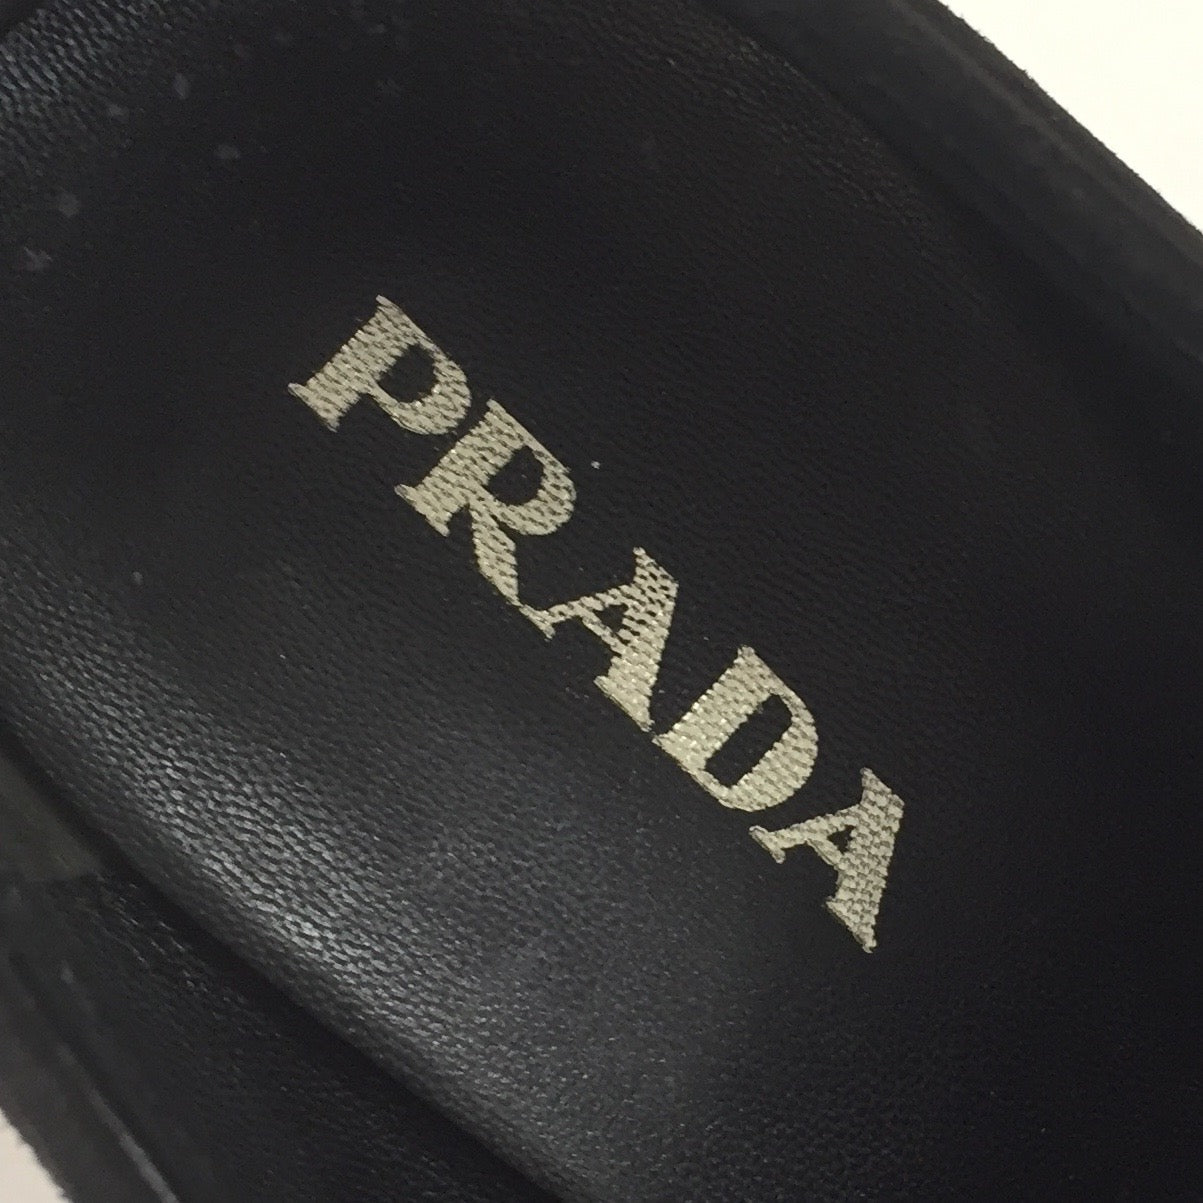 Authentic Prada Black Suede Booties Women's Size 41